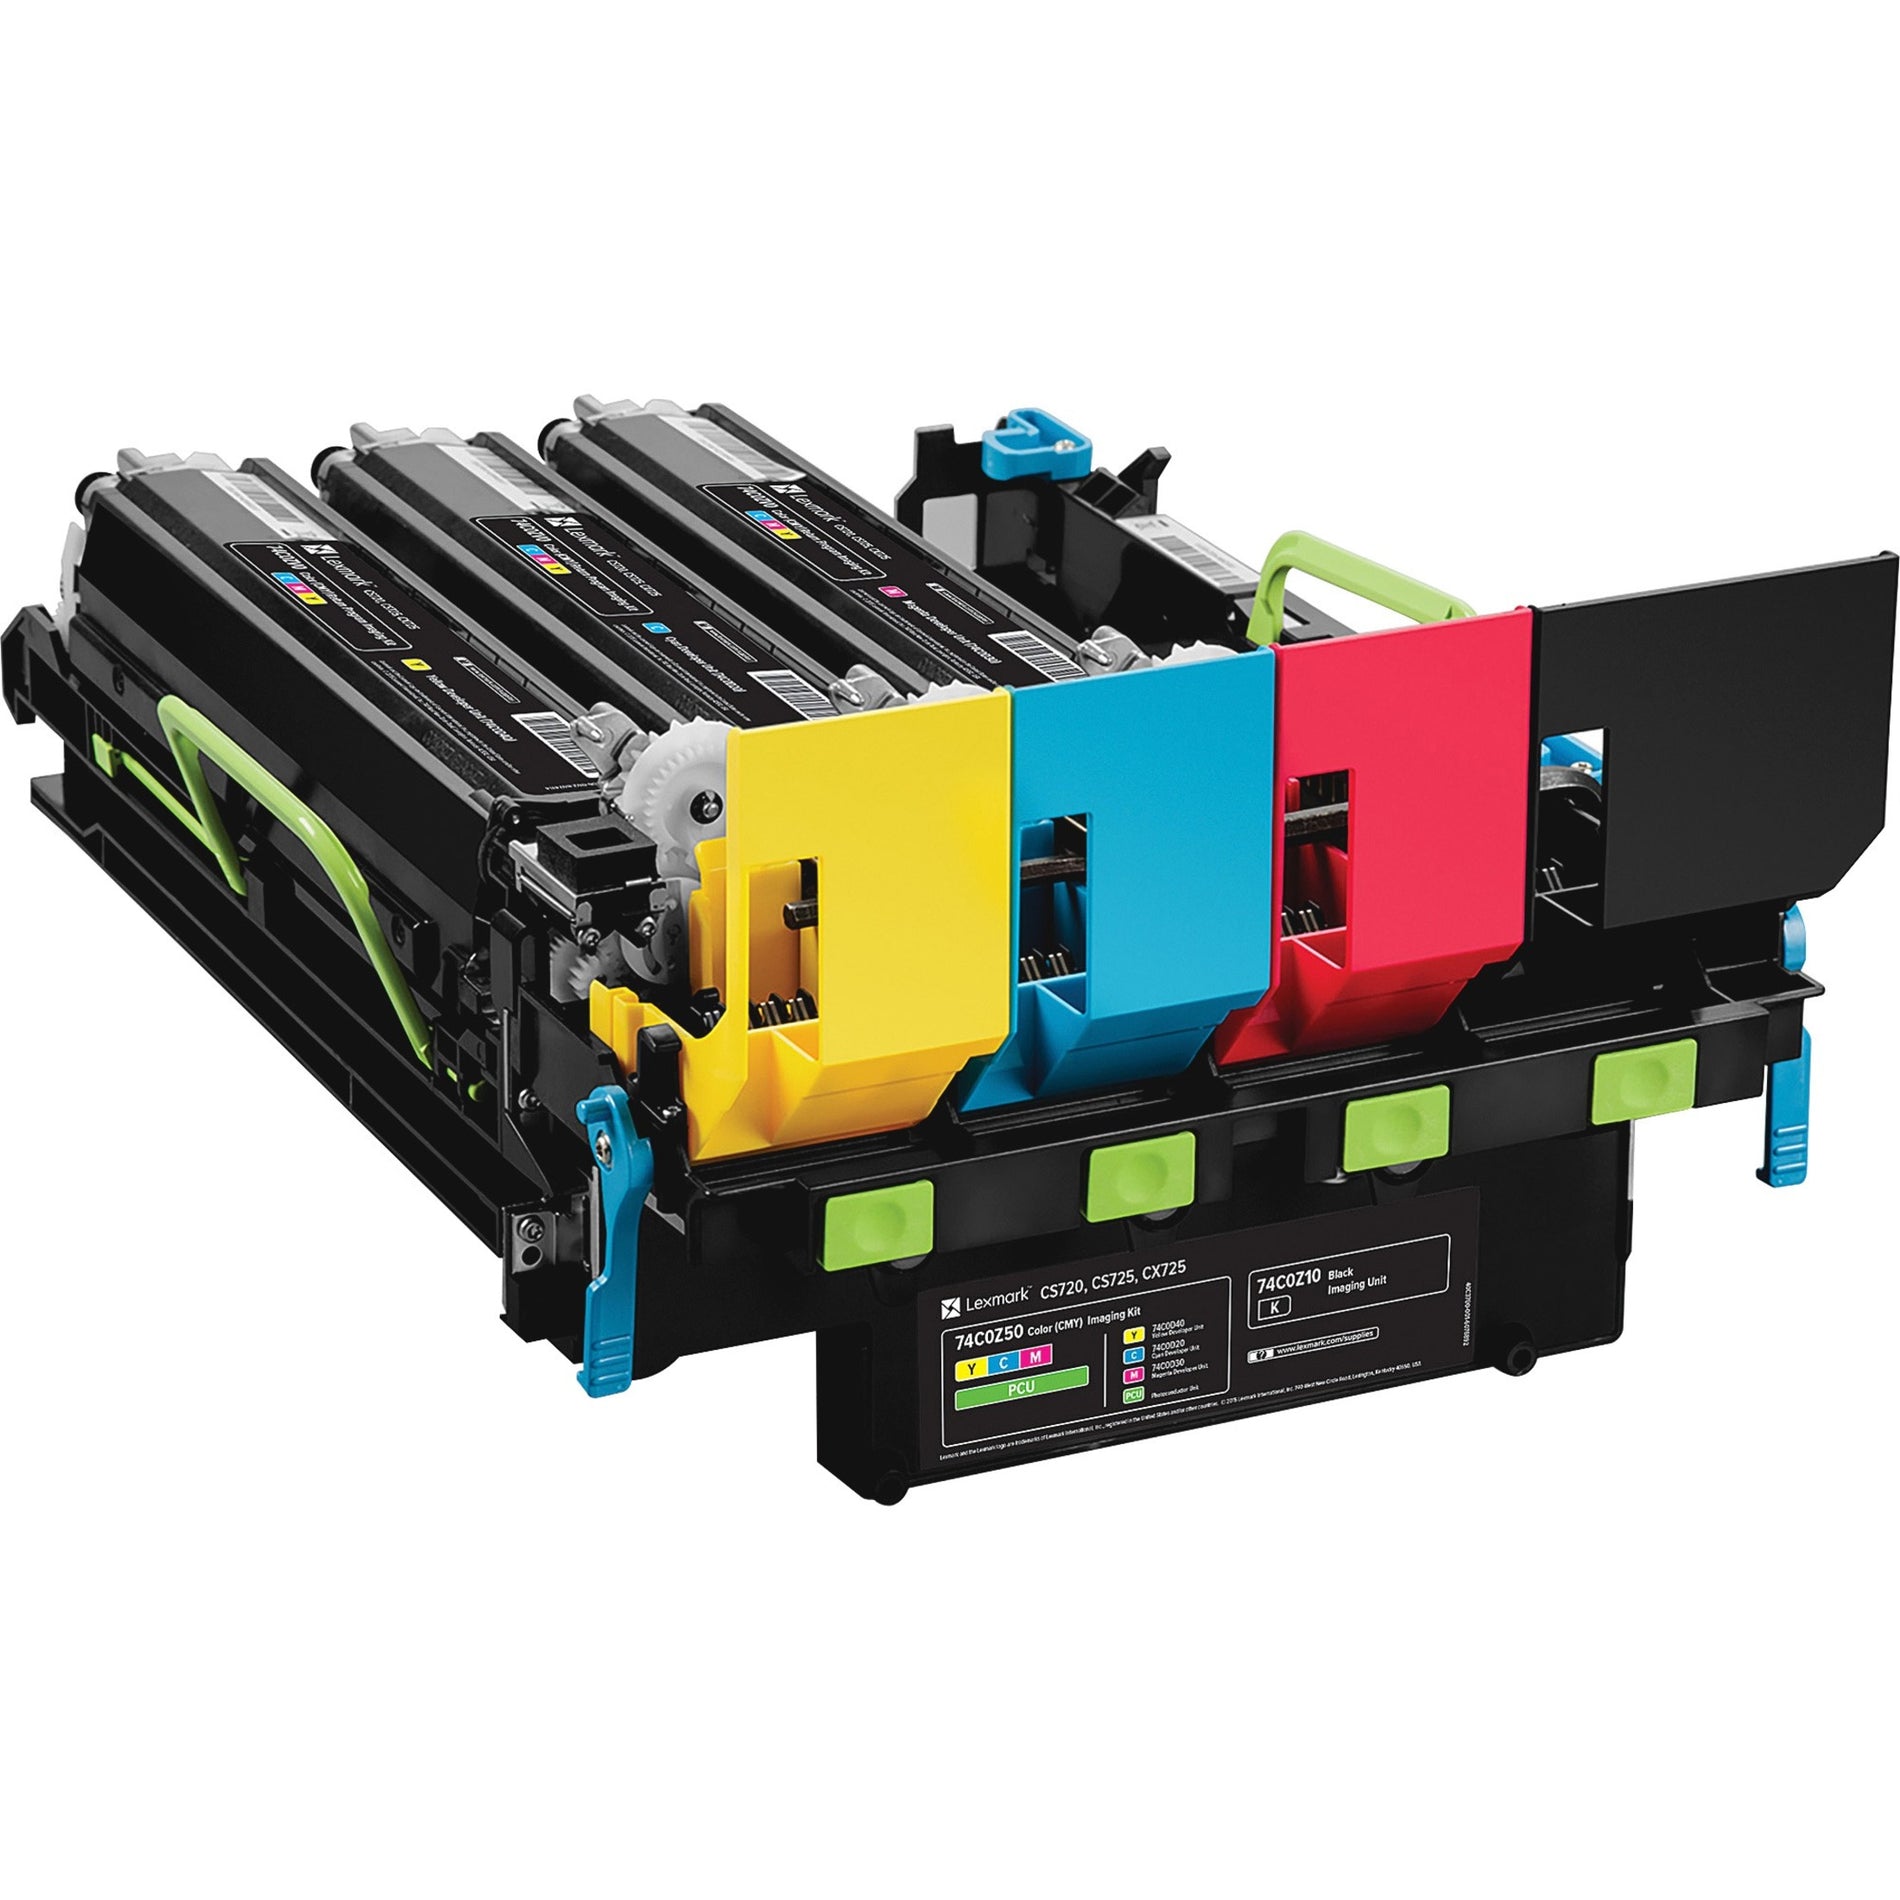 Lexmark 74C0Z50 CS720 CS725 CX725 Colore (CMY) Imaging Kit Laser 150000 Stampa Rendimento